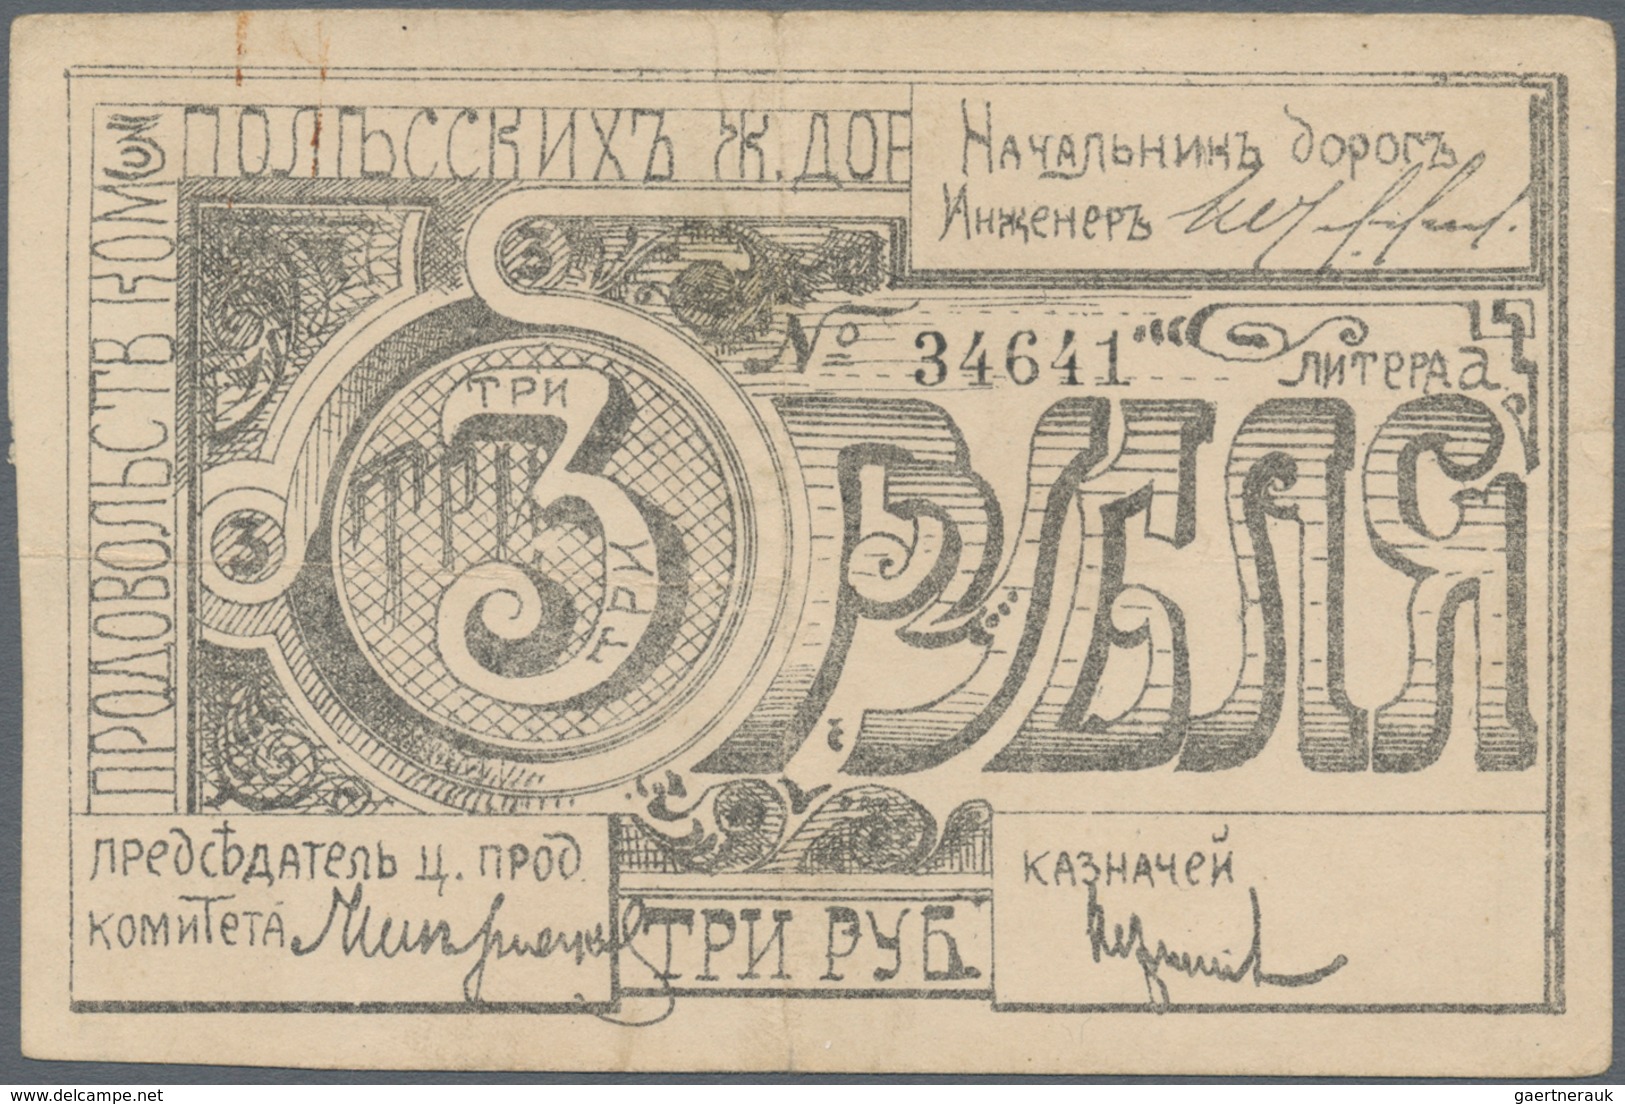 Belarus: 3 Rubles 1917, P.NL (R 19823), Vertical Fold, No Hole. Condition F - VF. - Belarus